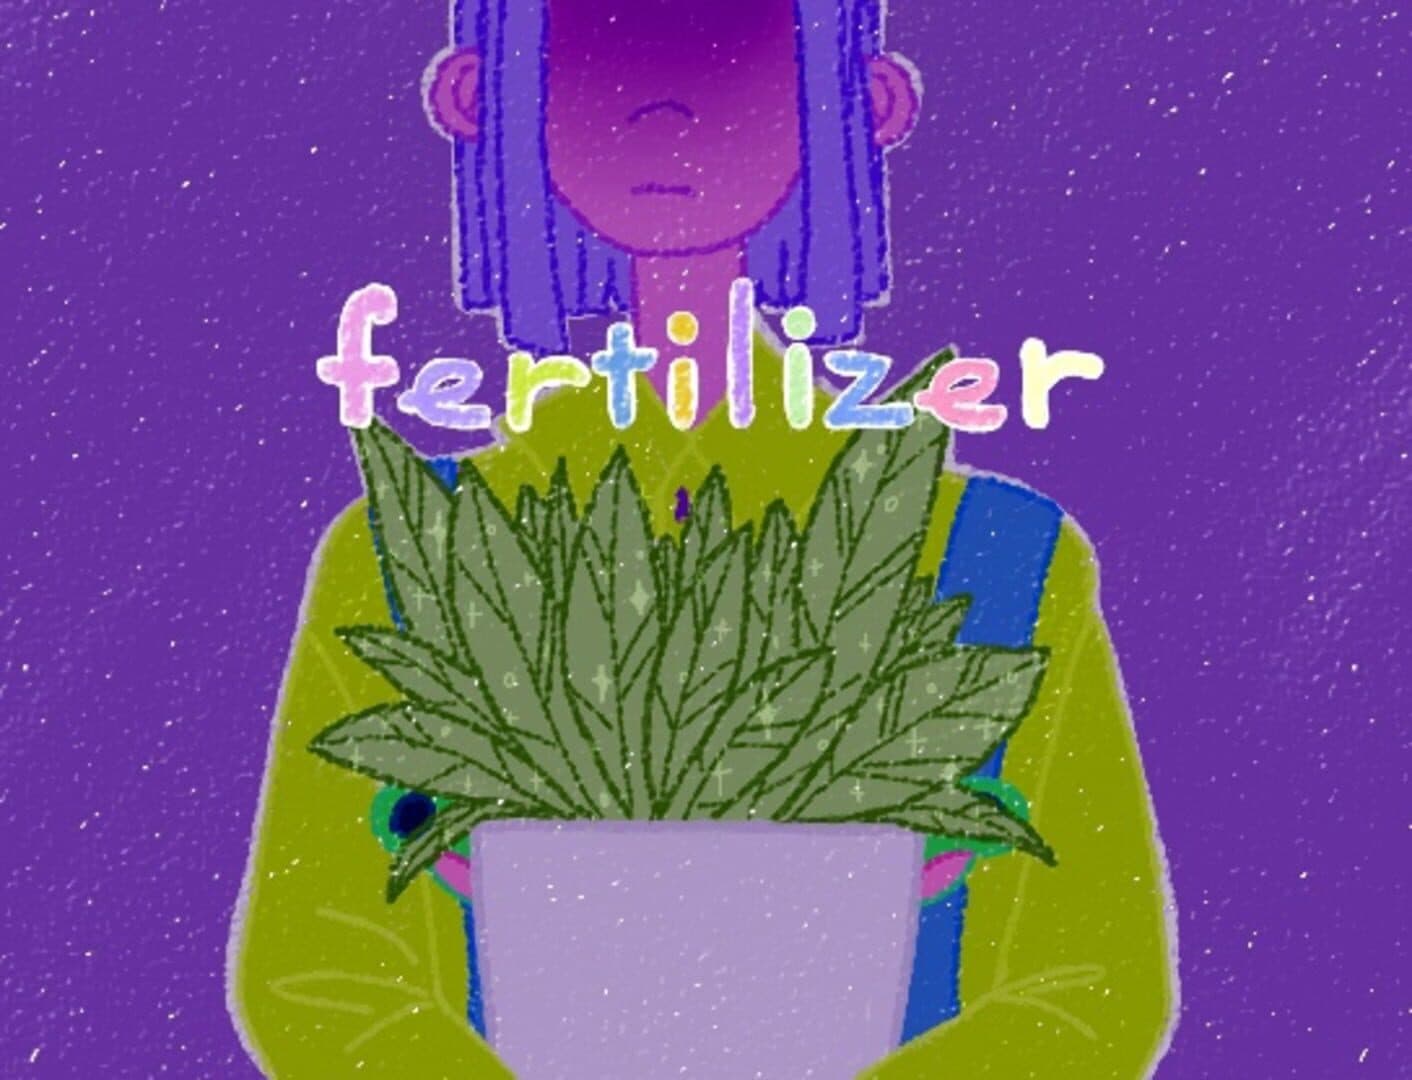 Fertilizer cover art